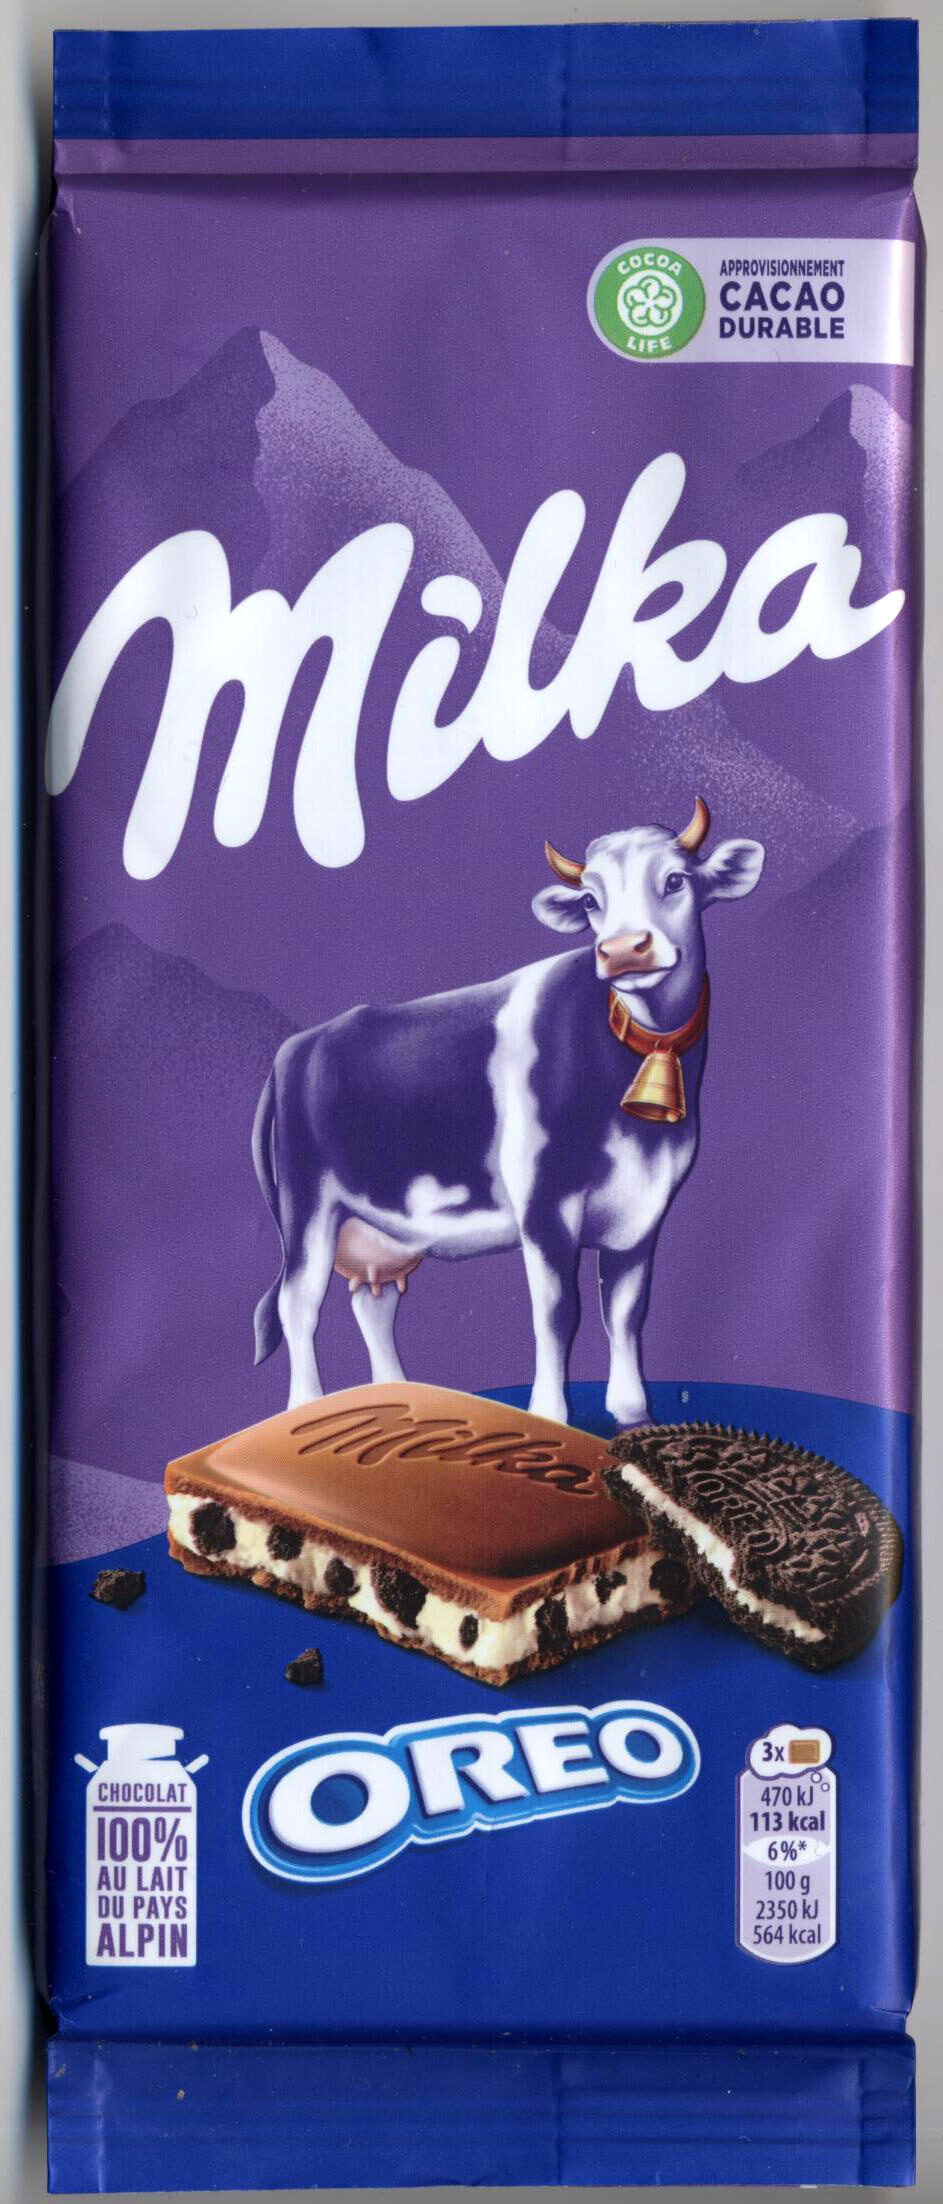 Milka - Oreo - Product - fr